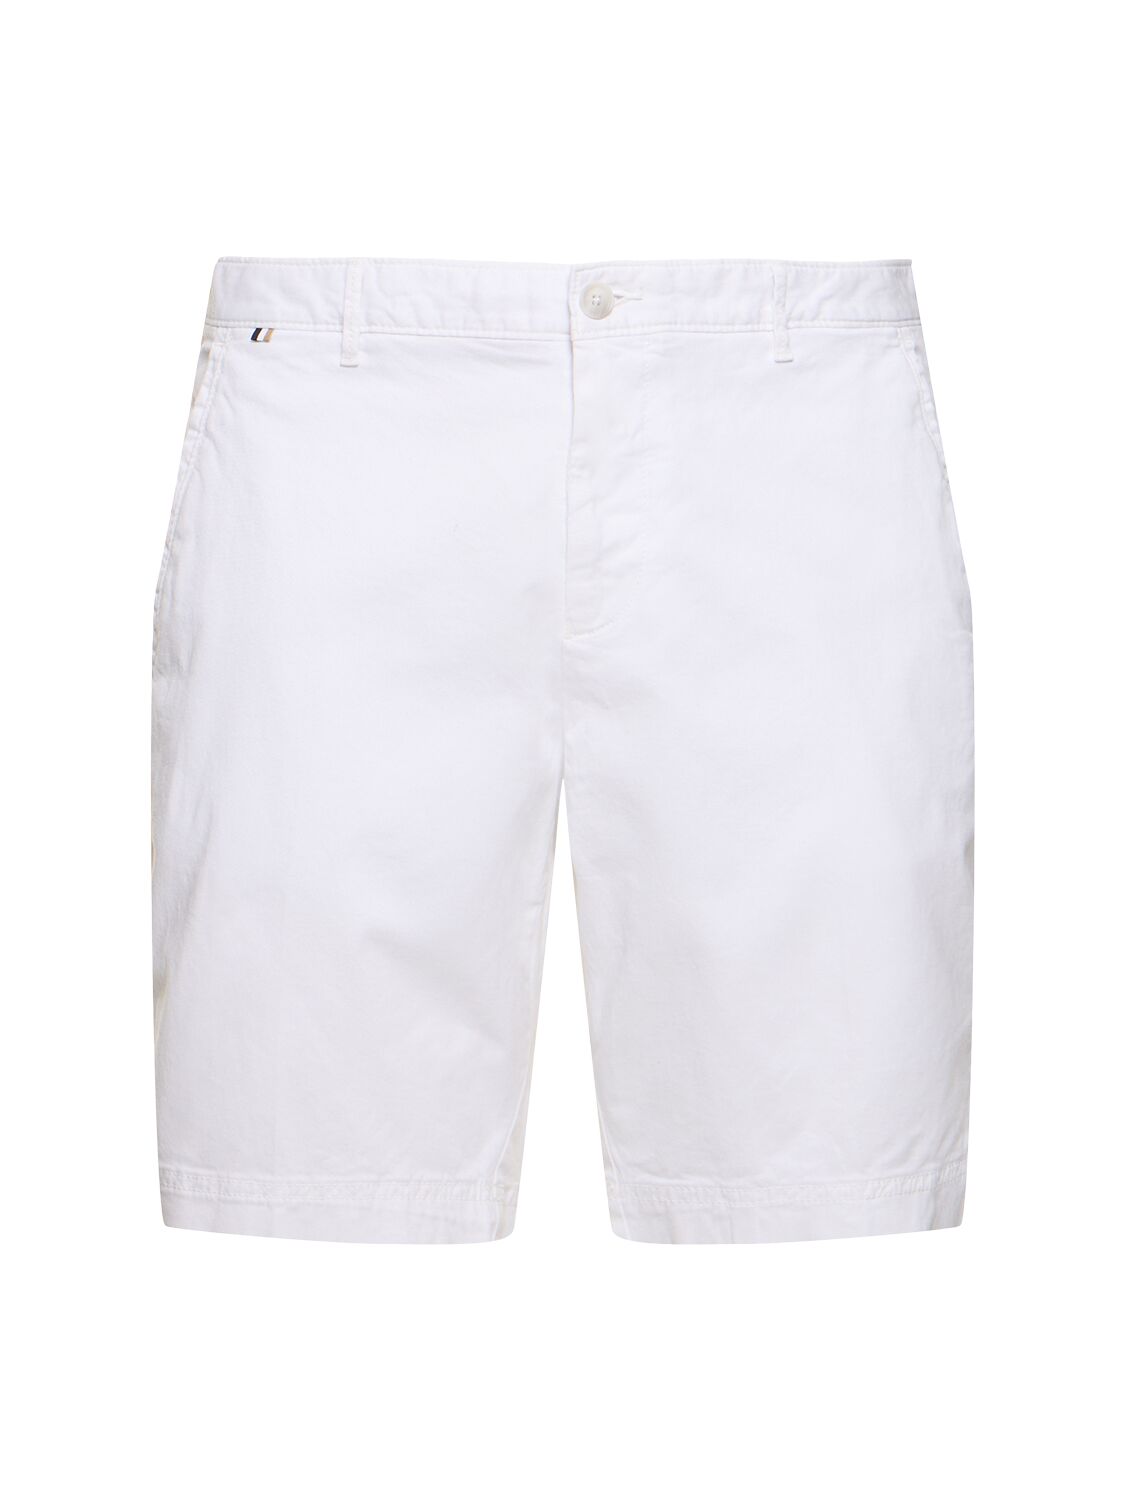 Hugo Boss White Stretch Cotton Twill Bermuda Shorts